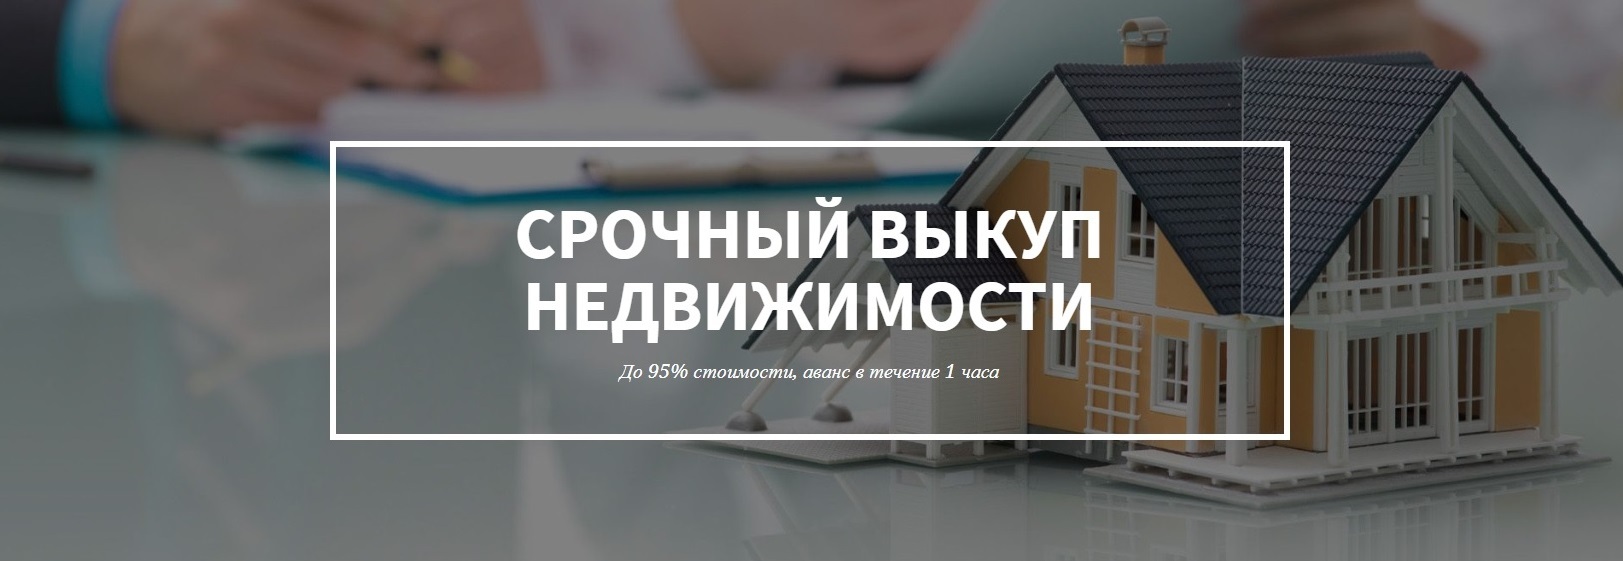 дизайн картинка выкупа недвижимости в Южно-Сахалинске